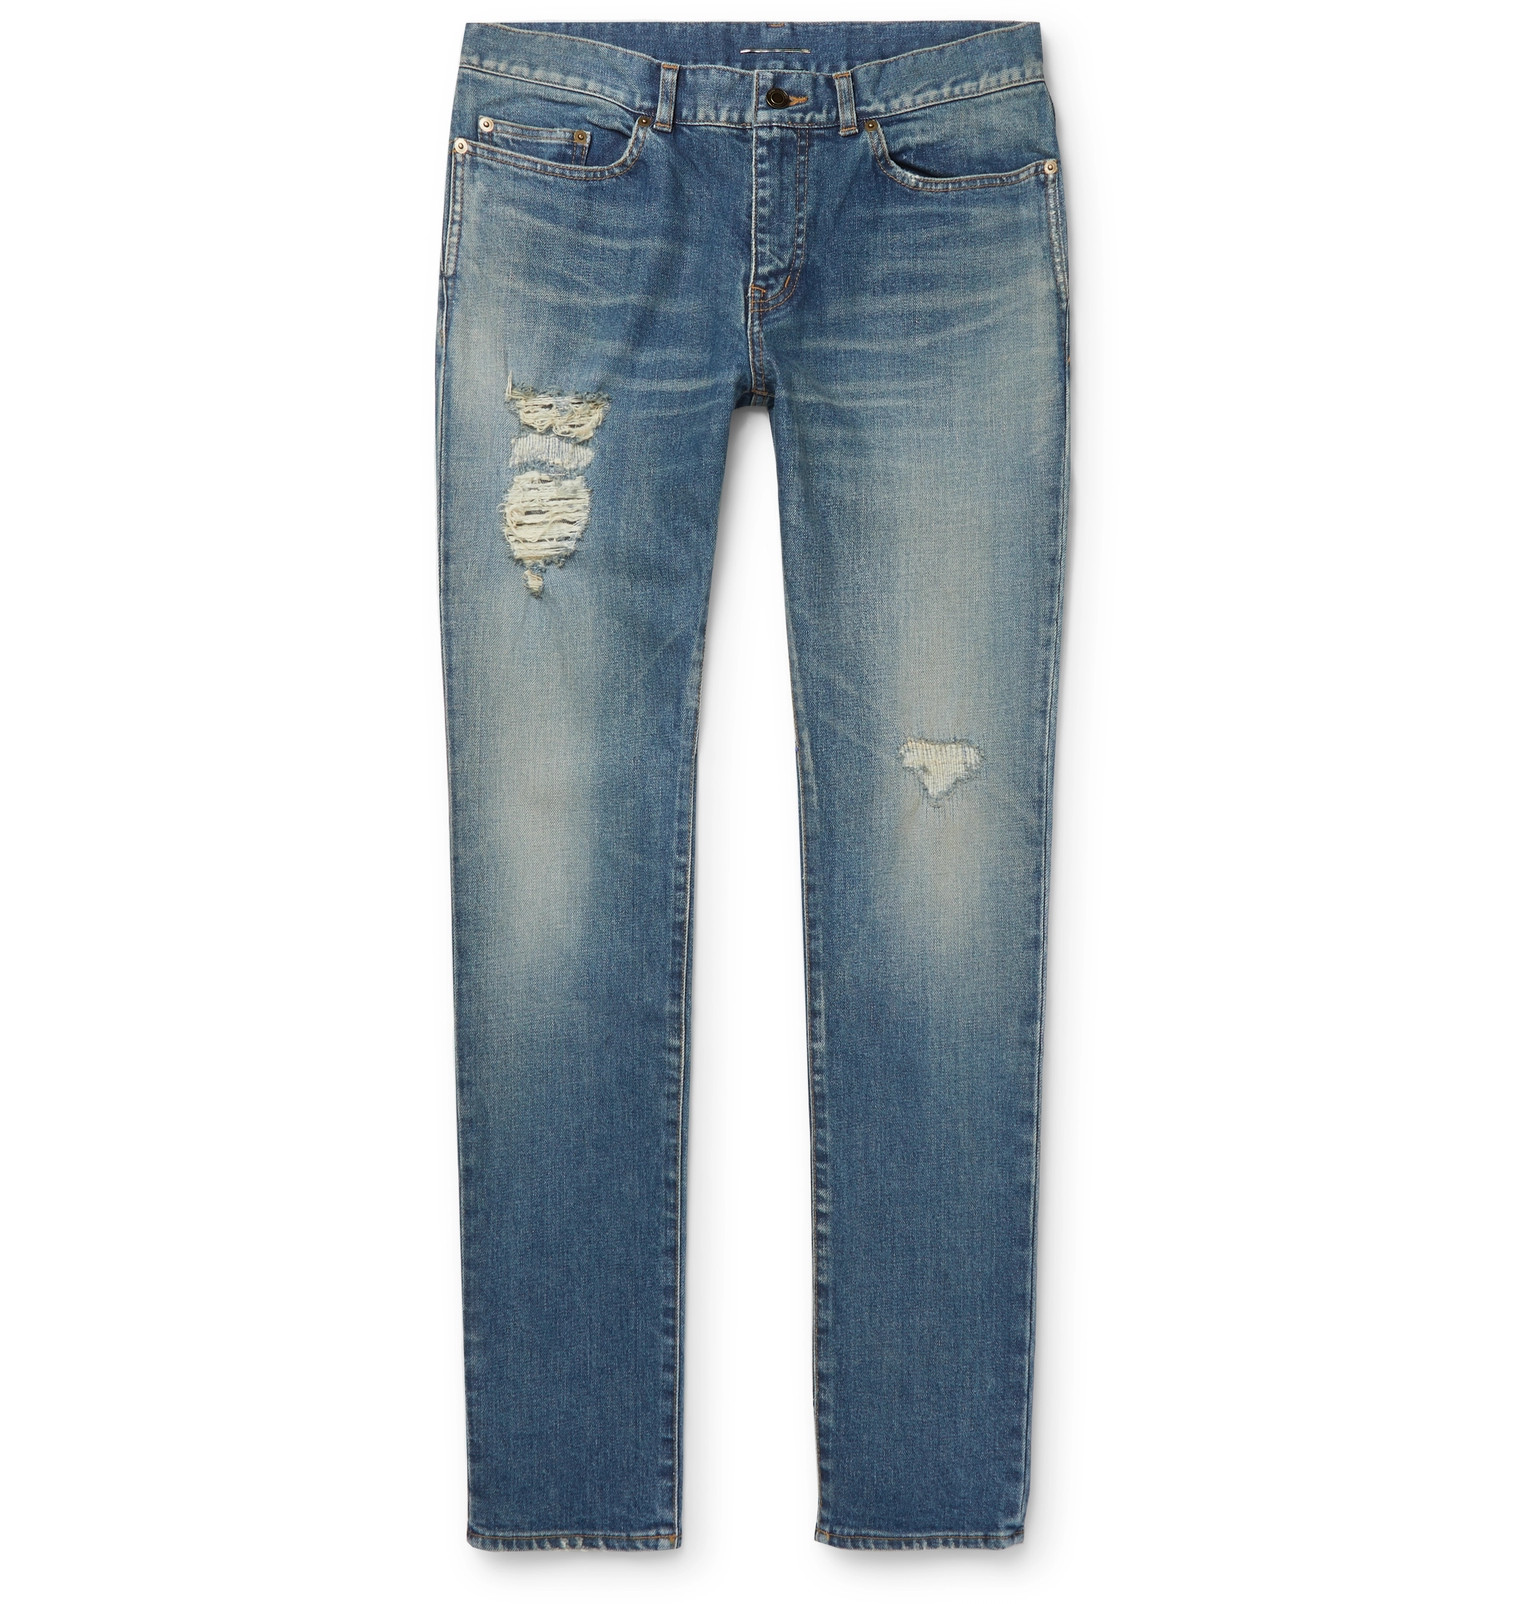 distressed denim jeans mens